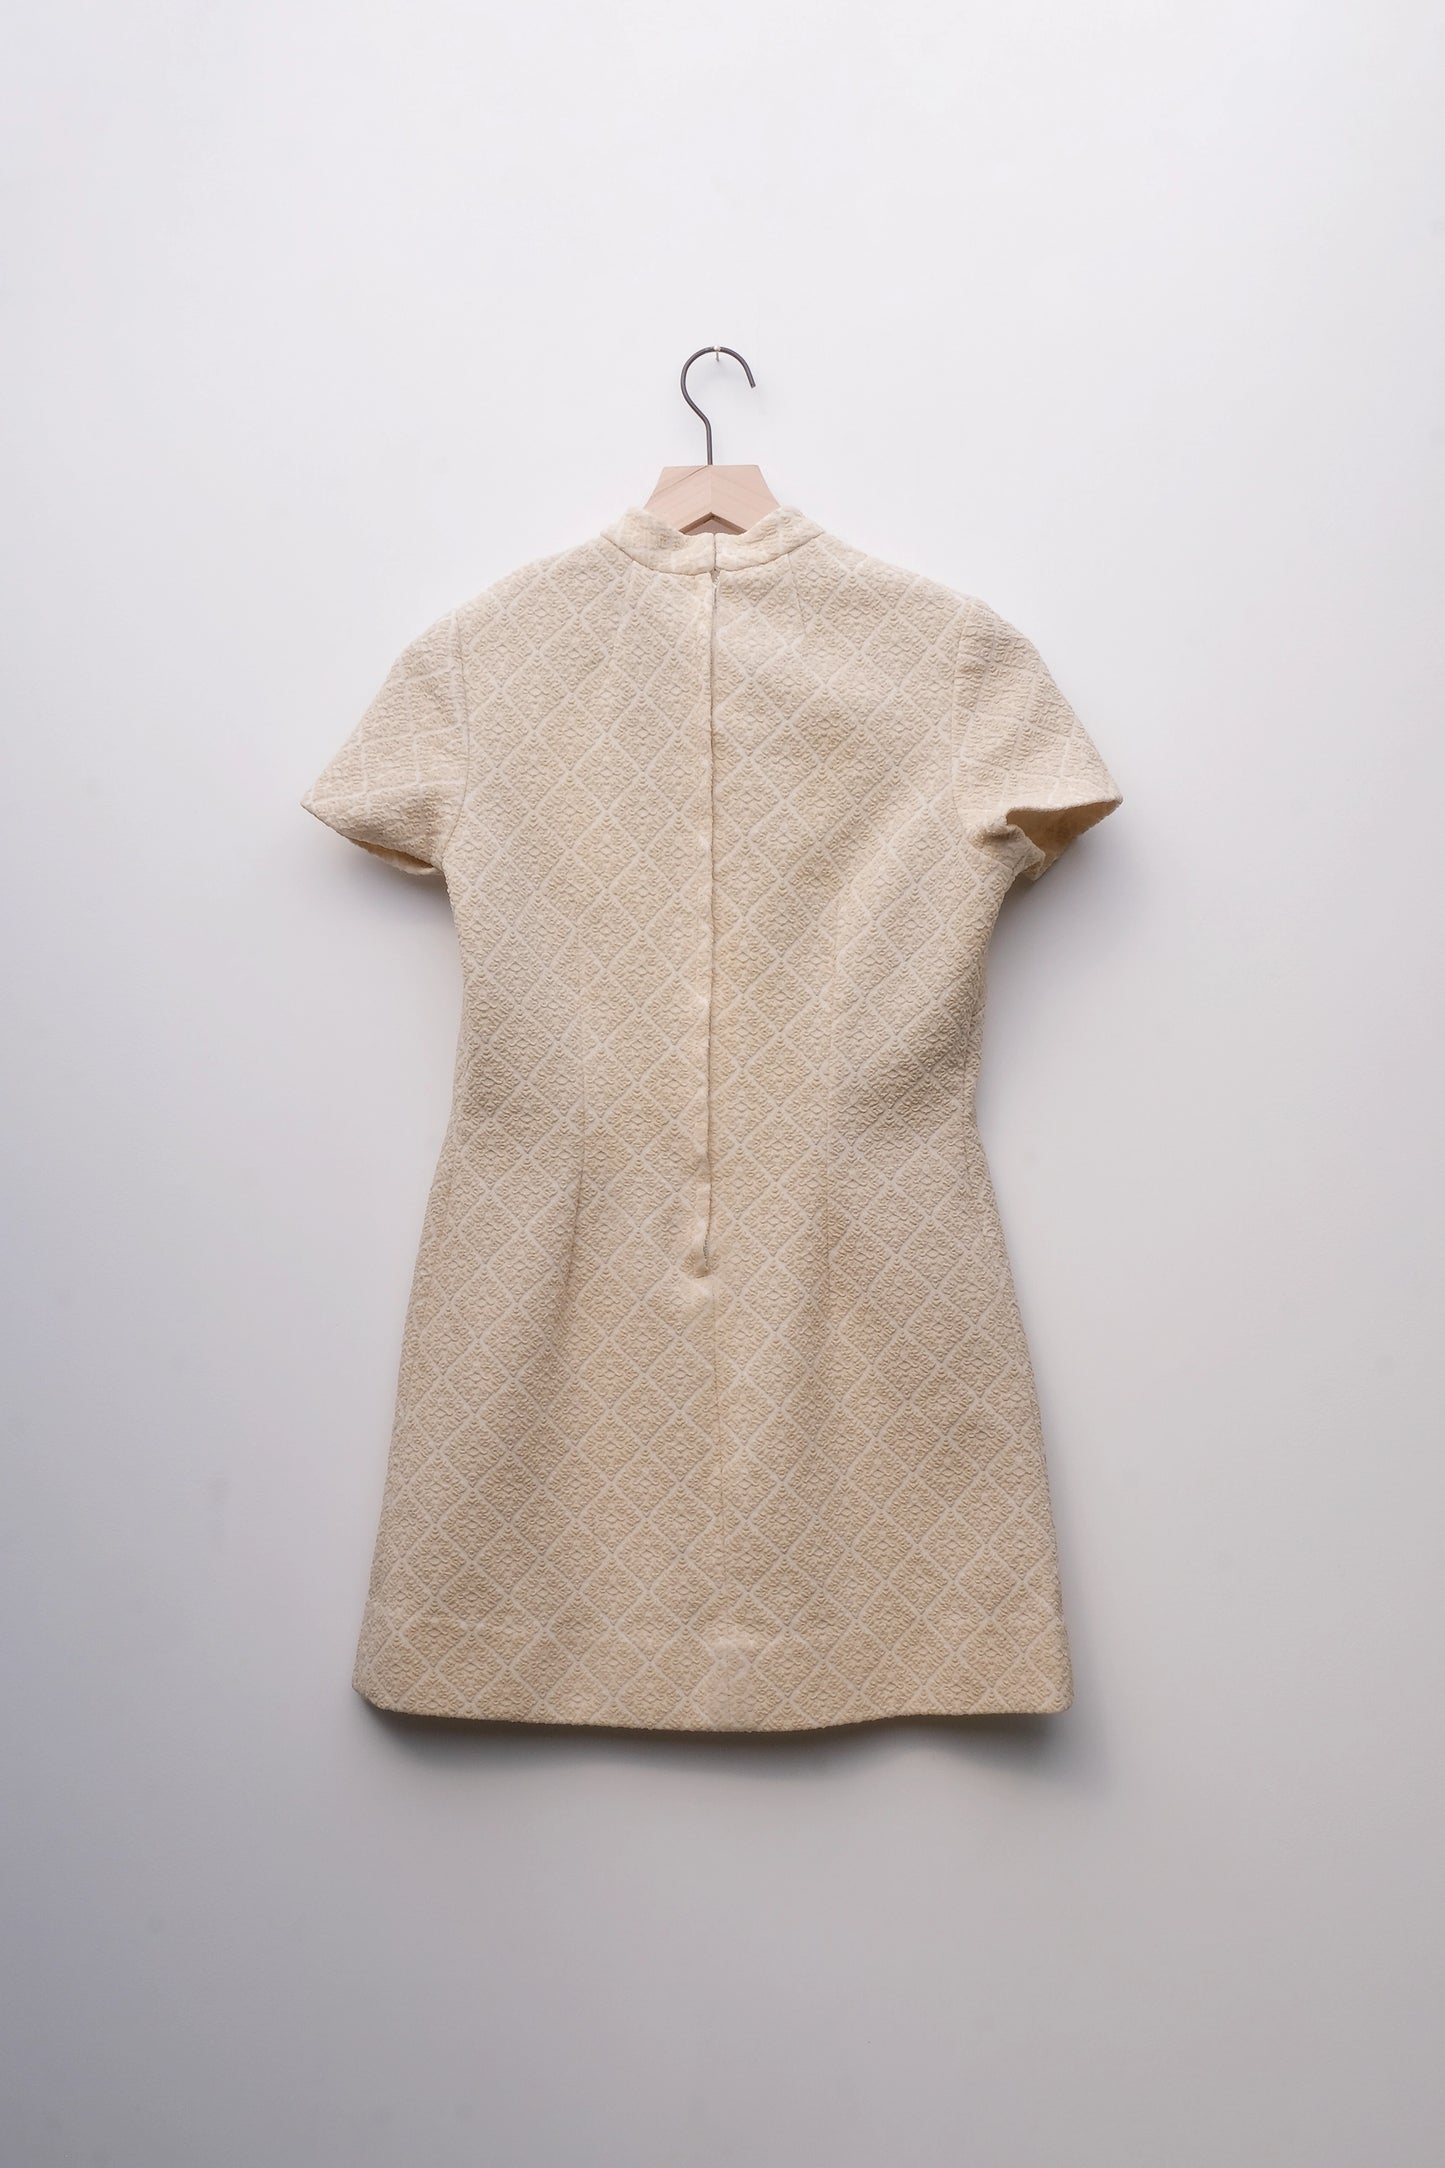 Cream 60's Mod Textured Pattern Dress Mock Neck, US 6